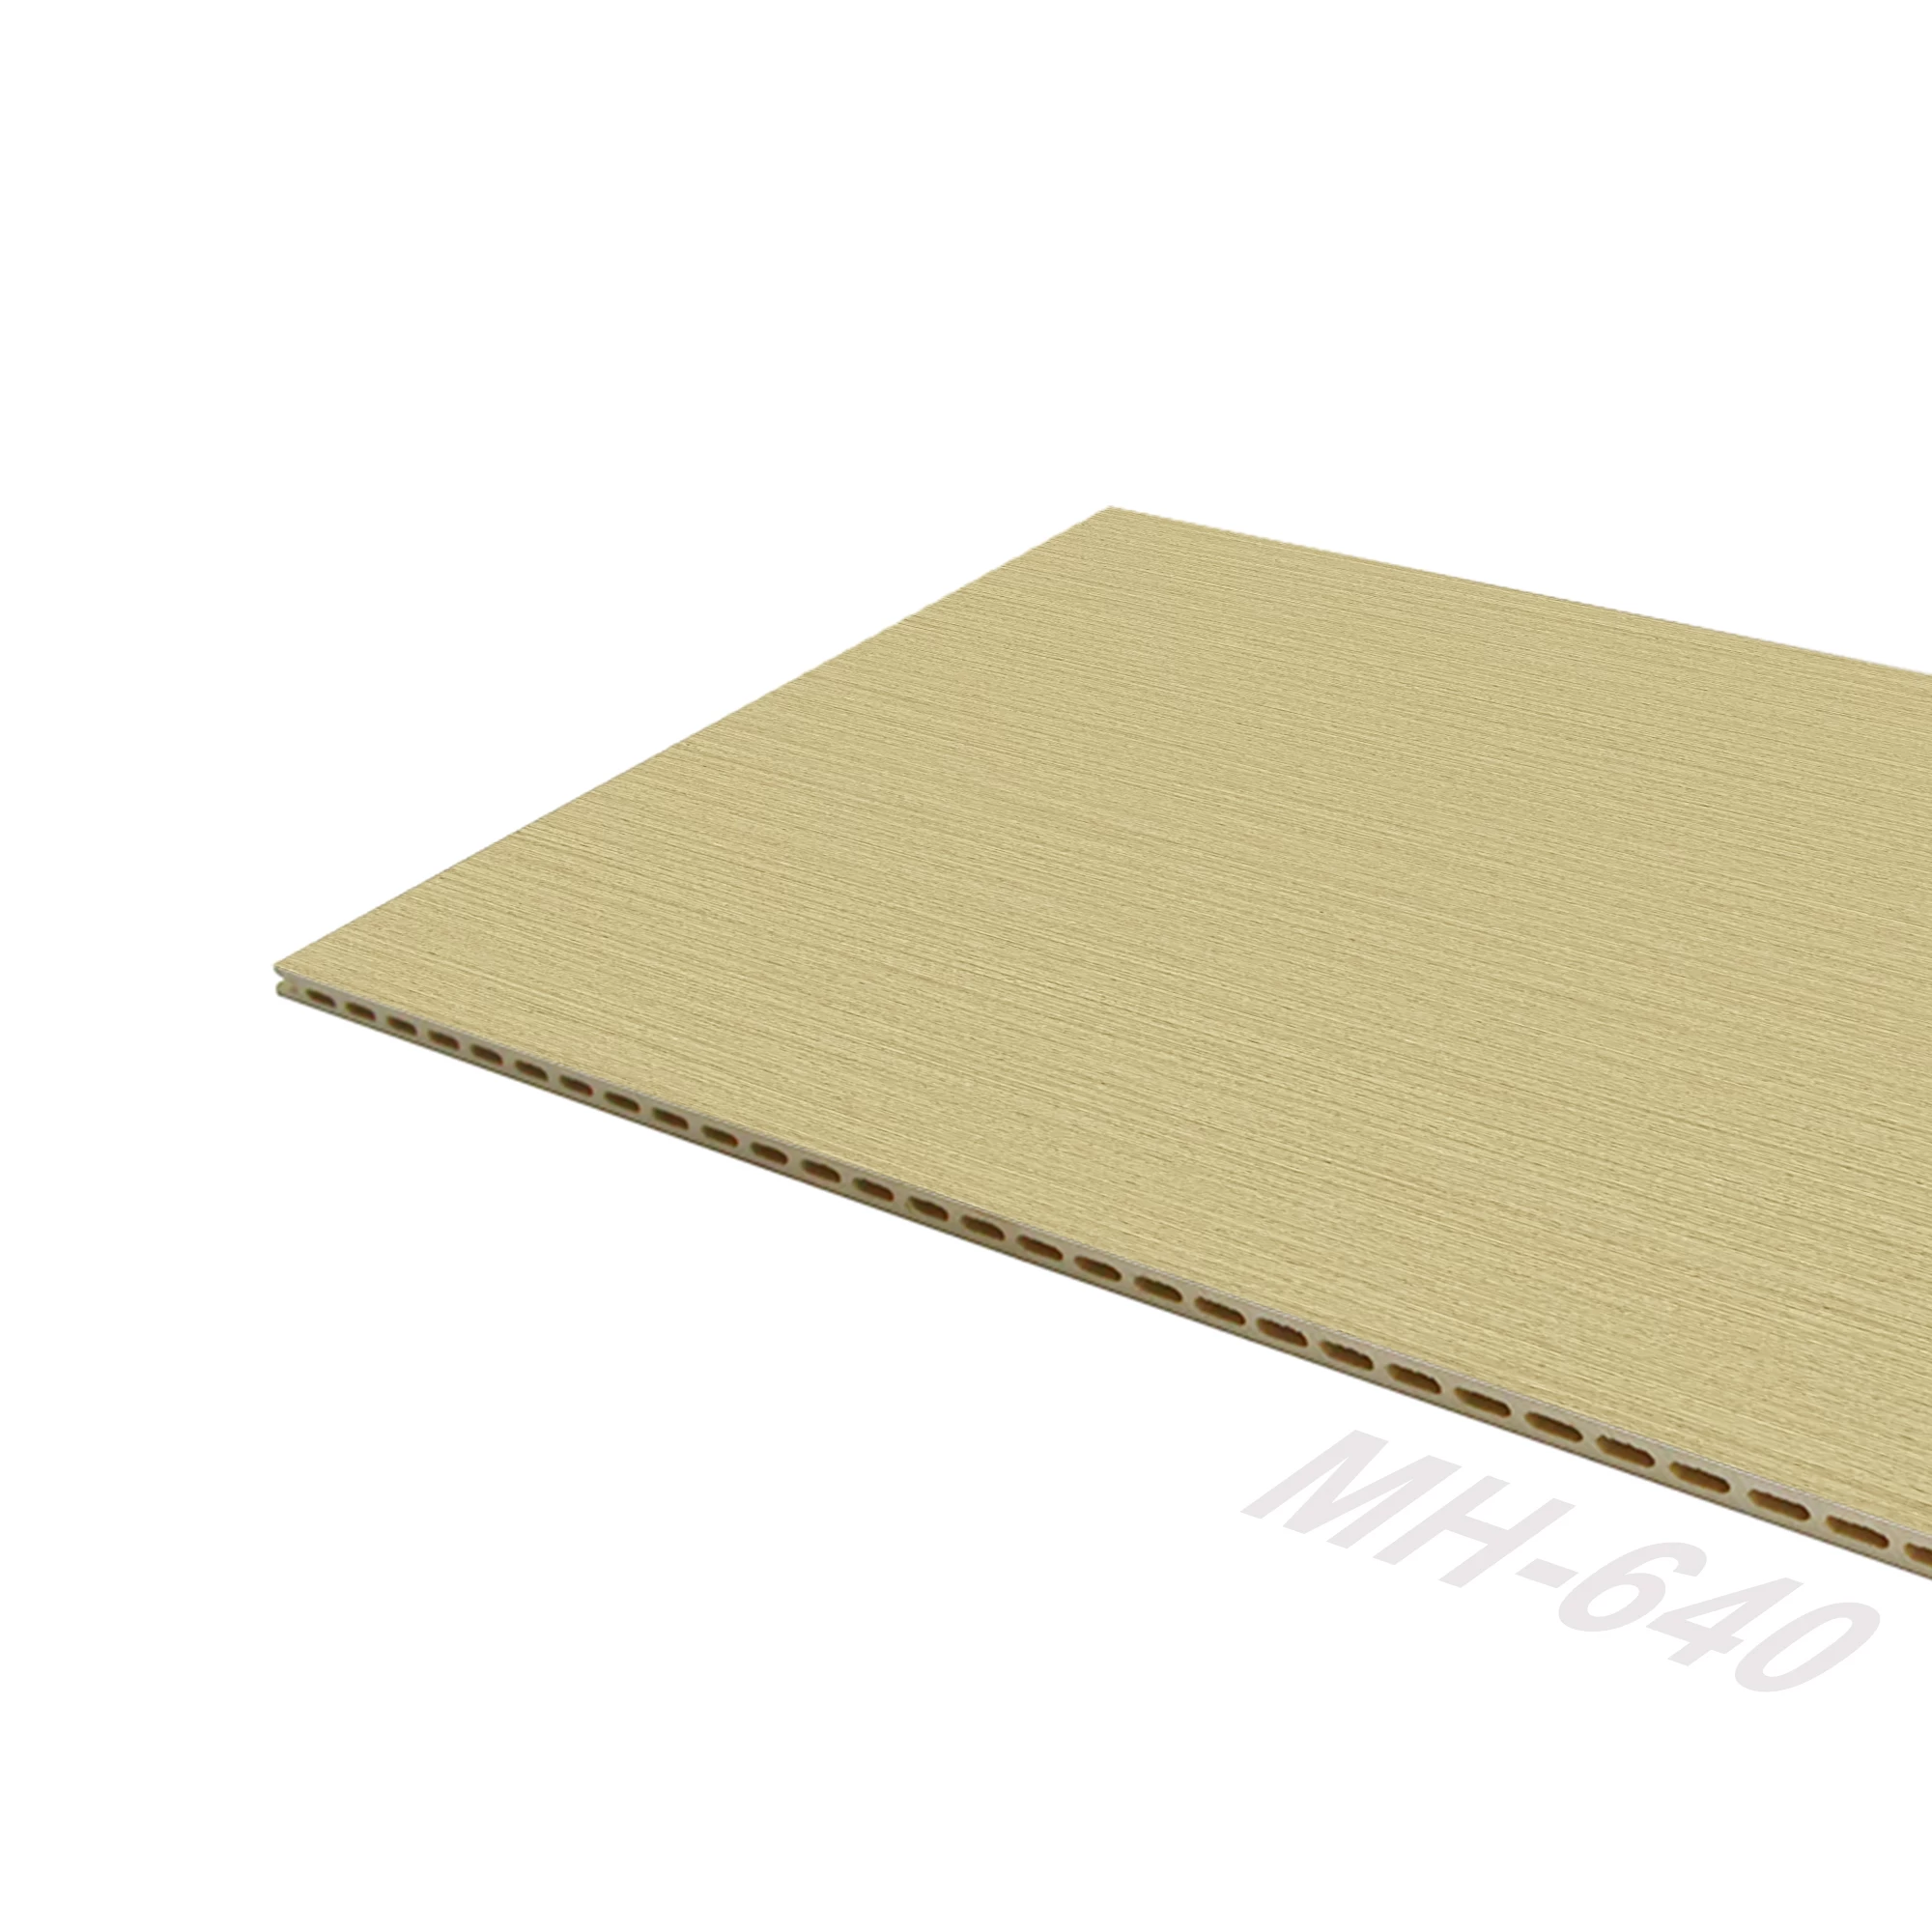 Bamboo and wood fiber integrated wallboard PVC eco-wood